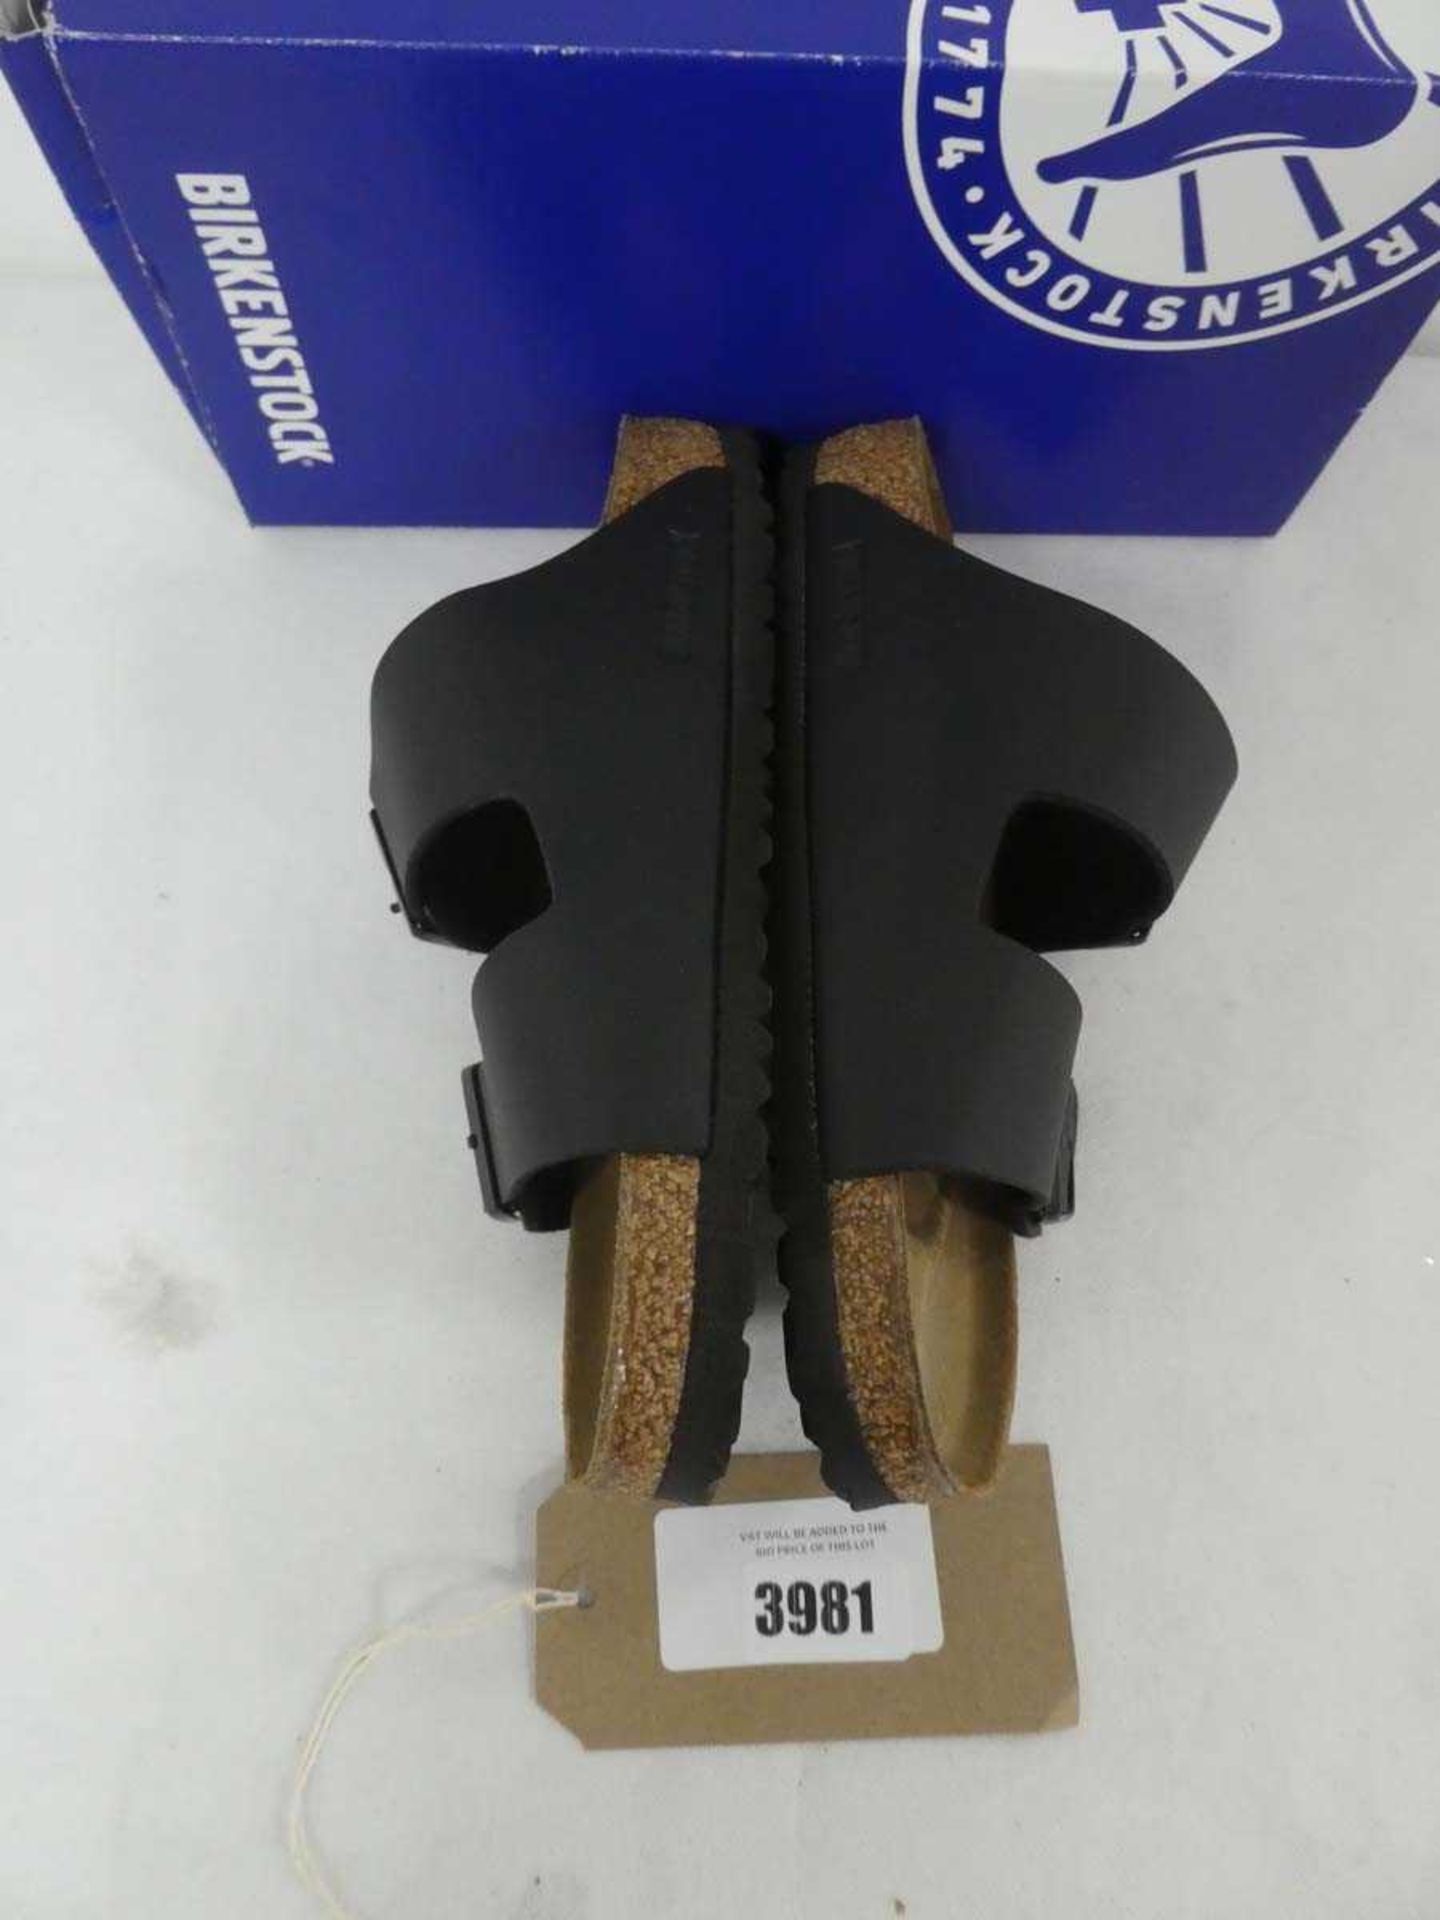 +VAT Boxed pair of Birkenstock Arizona leather sandals, size 6 - Image 2 of 3